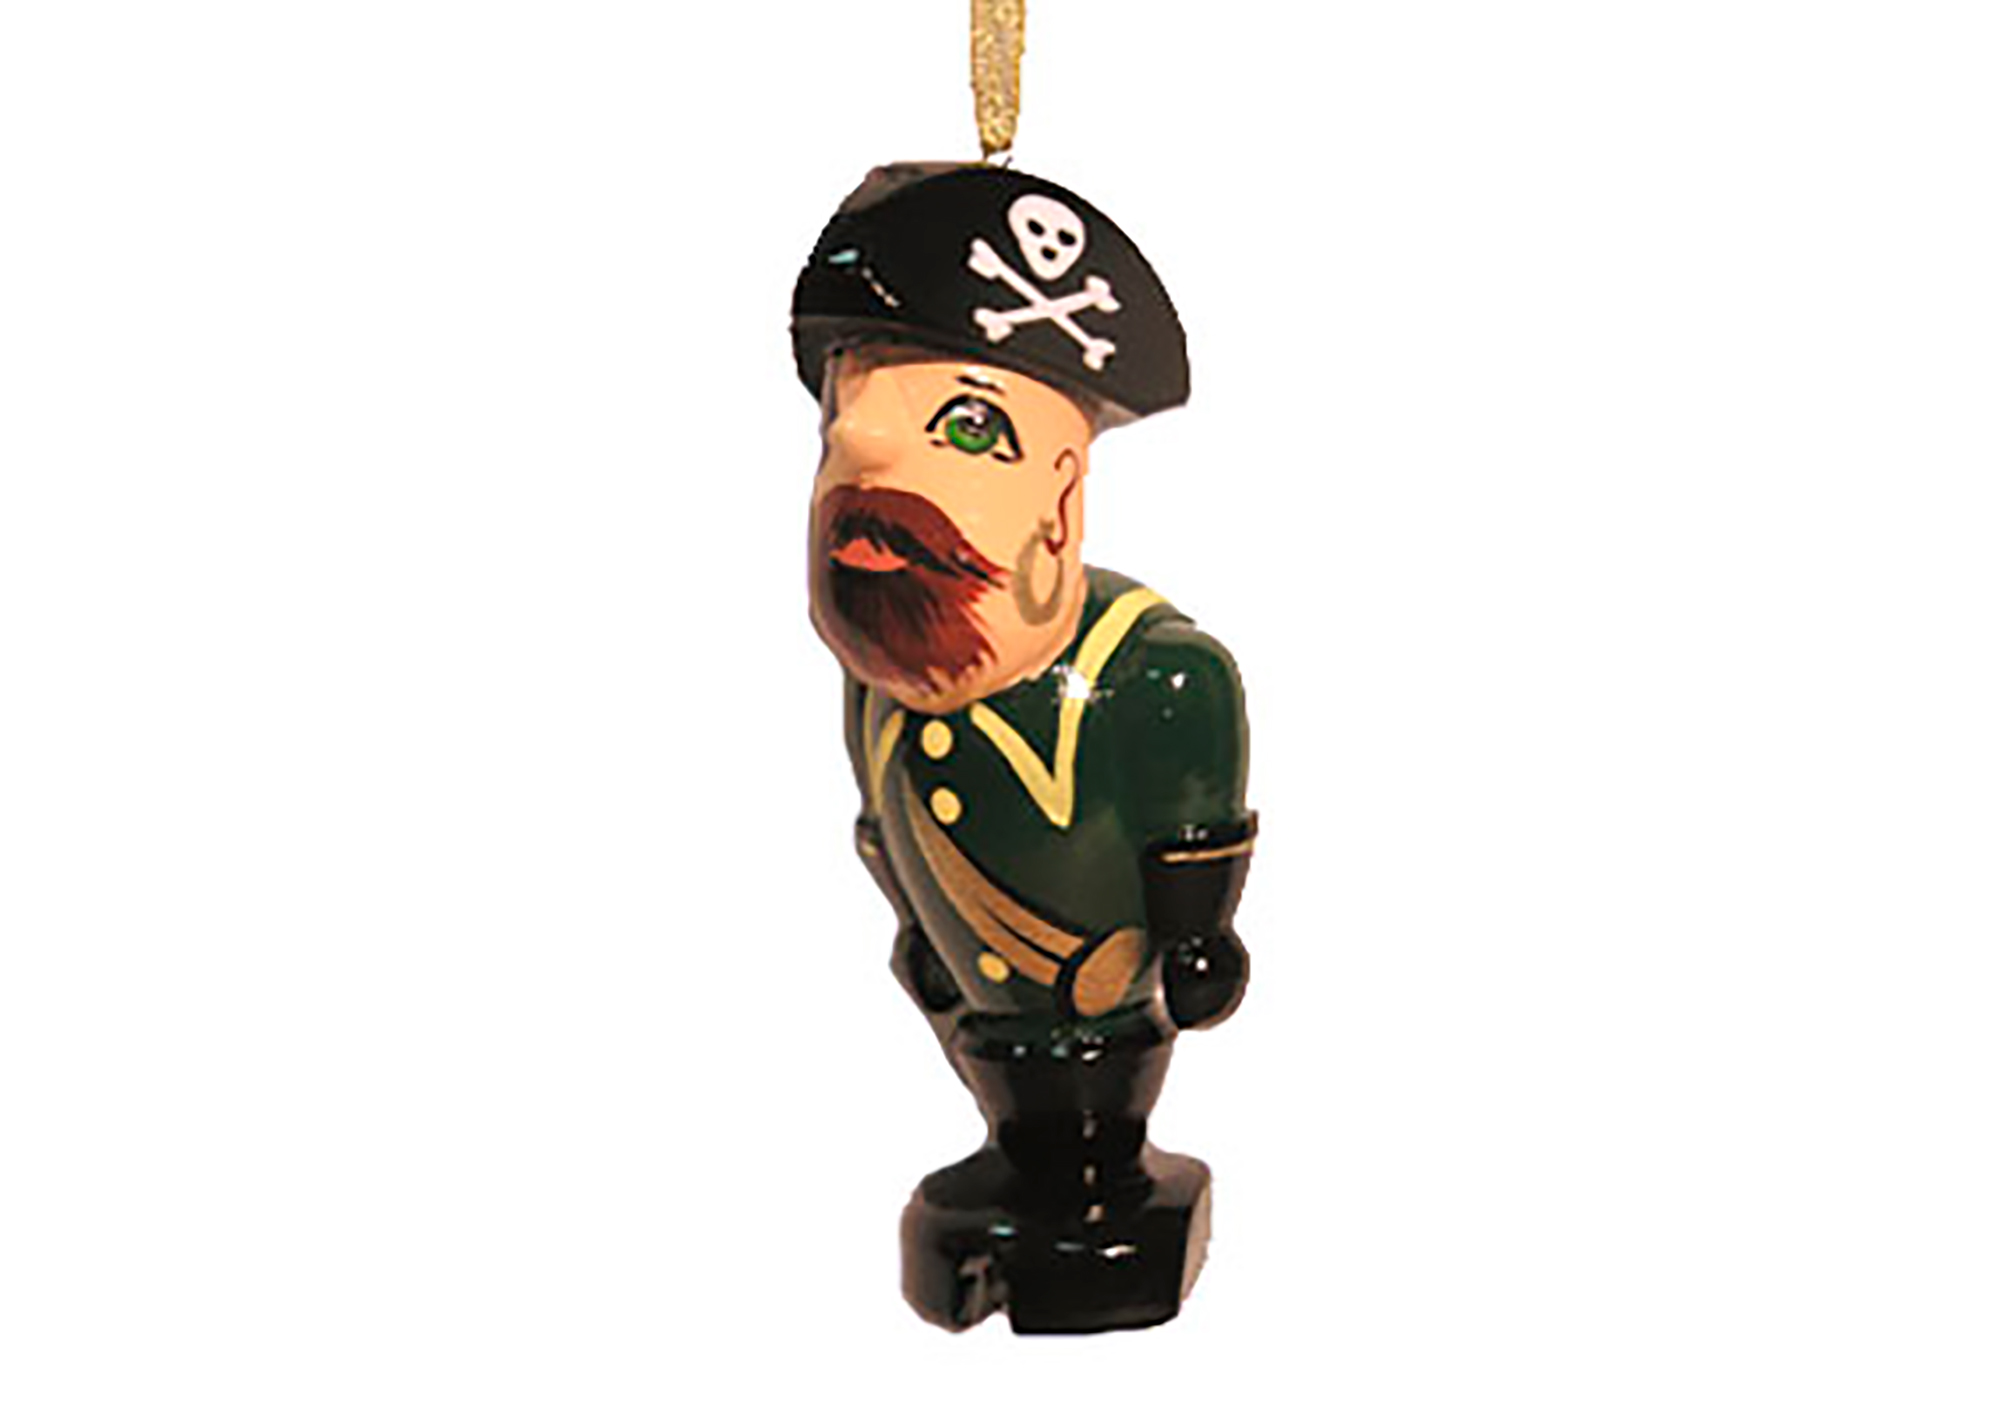 Buy Pirate Ornament 4" at GoldenCockerel.com